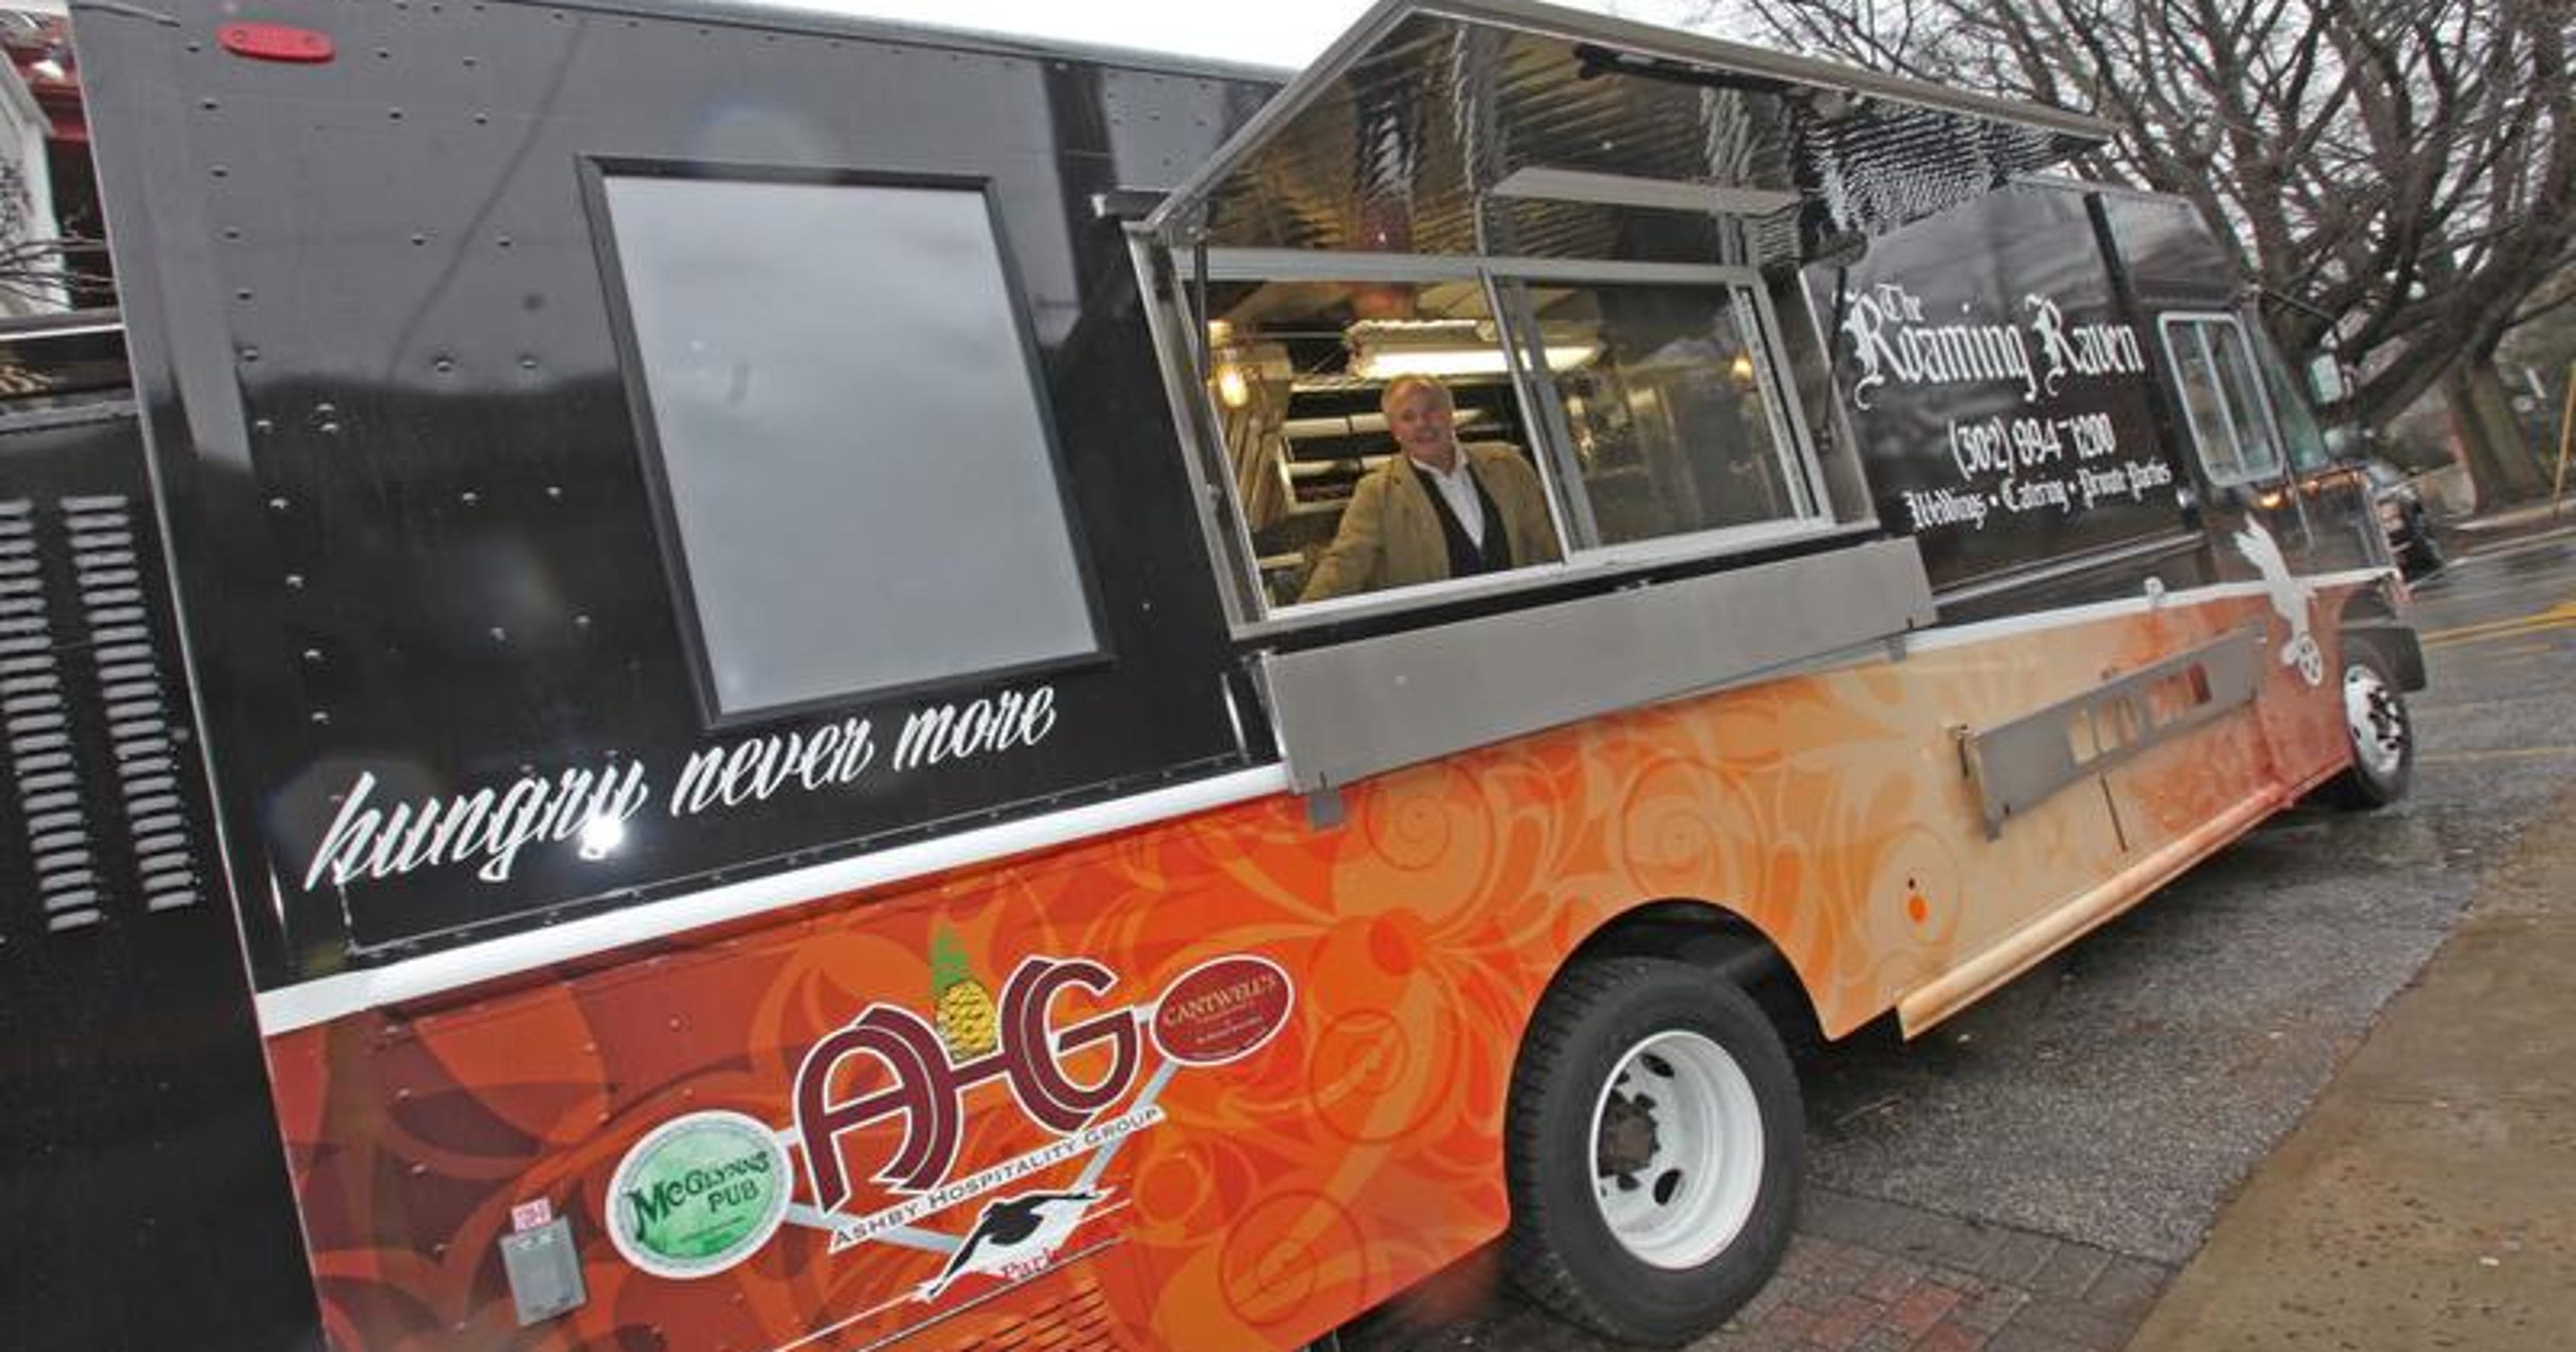 Edible Newark City heats up with Restaurant Week, Deer Park food truck